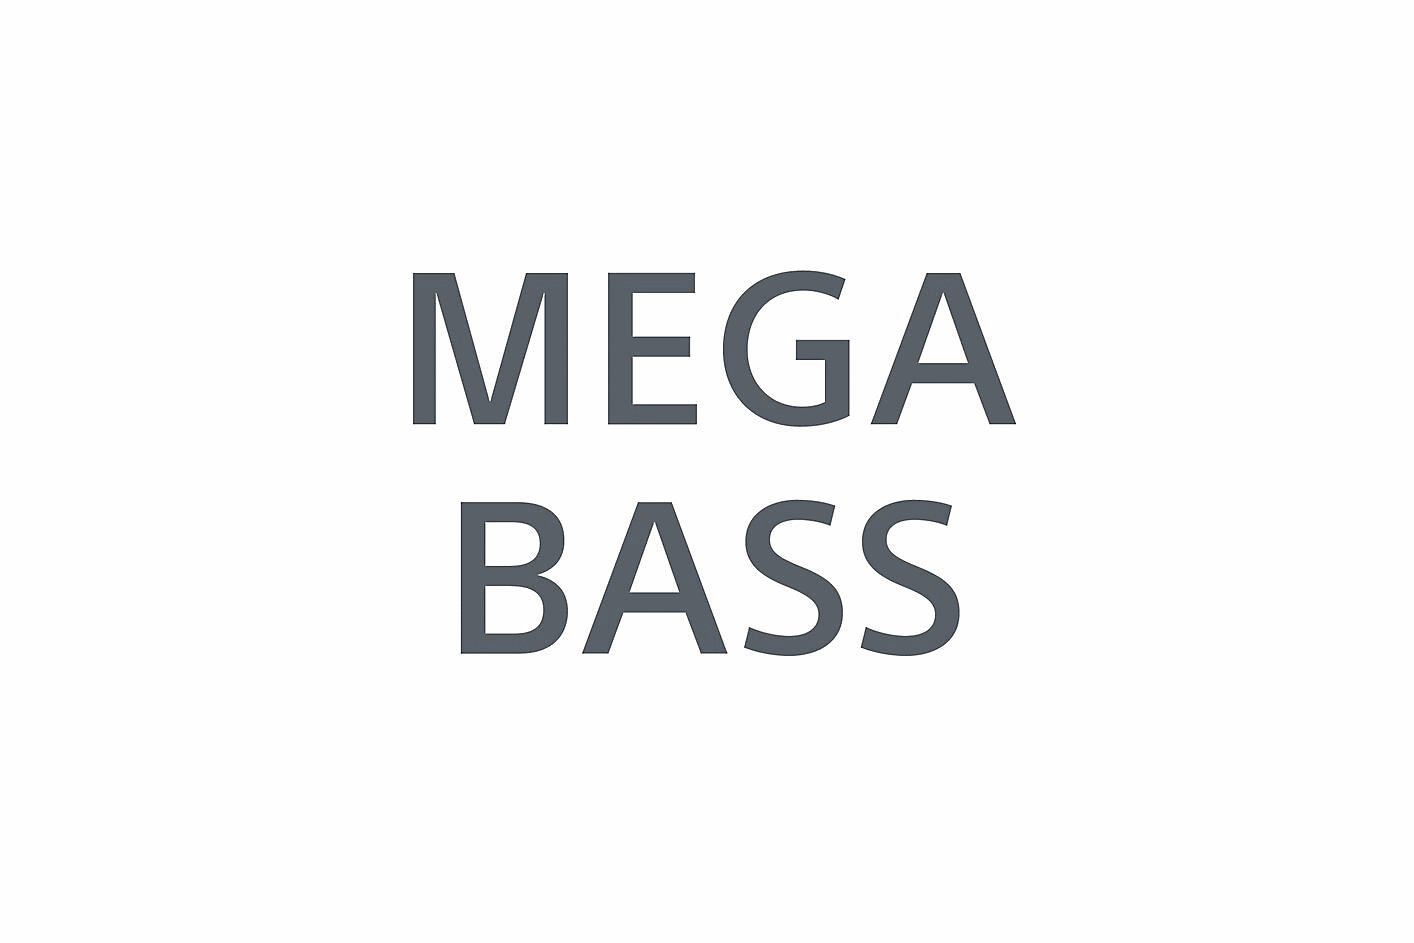 Image of the MEGA BASS icon